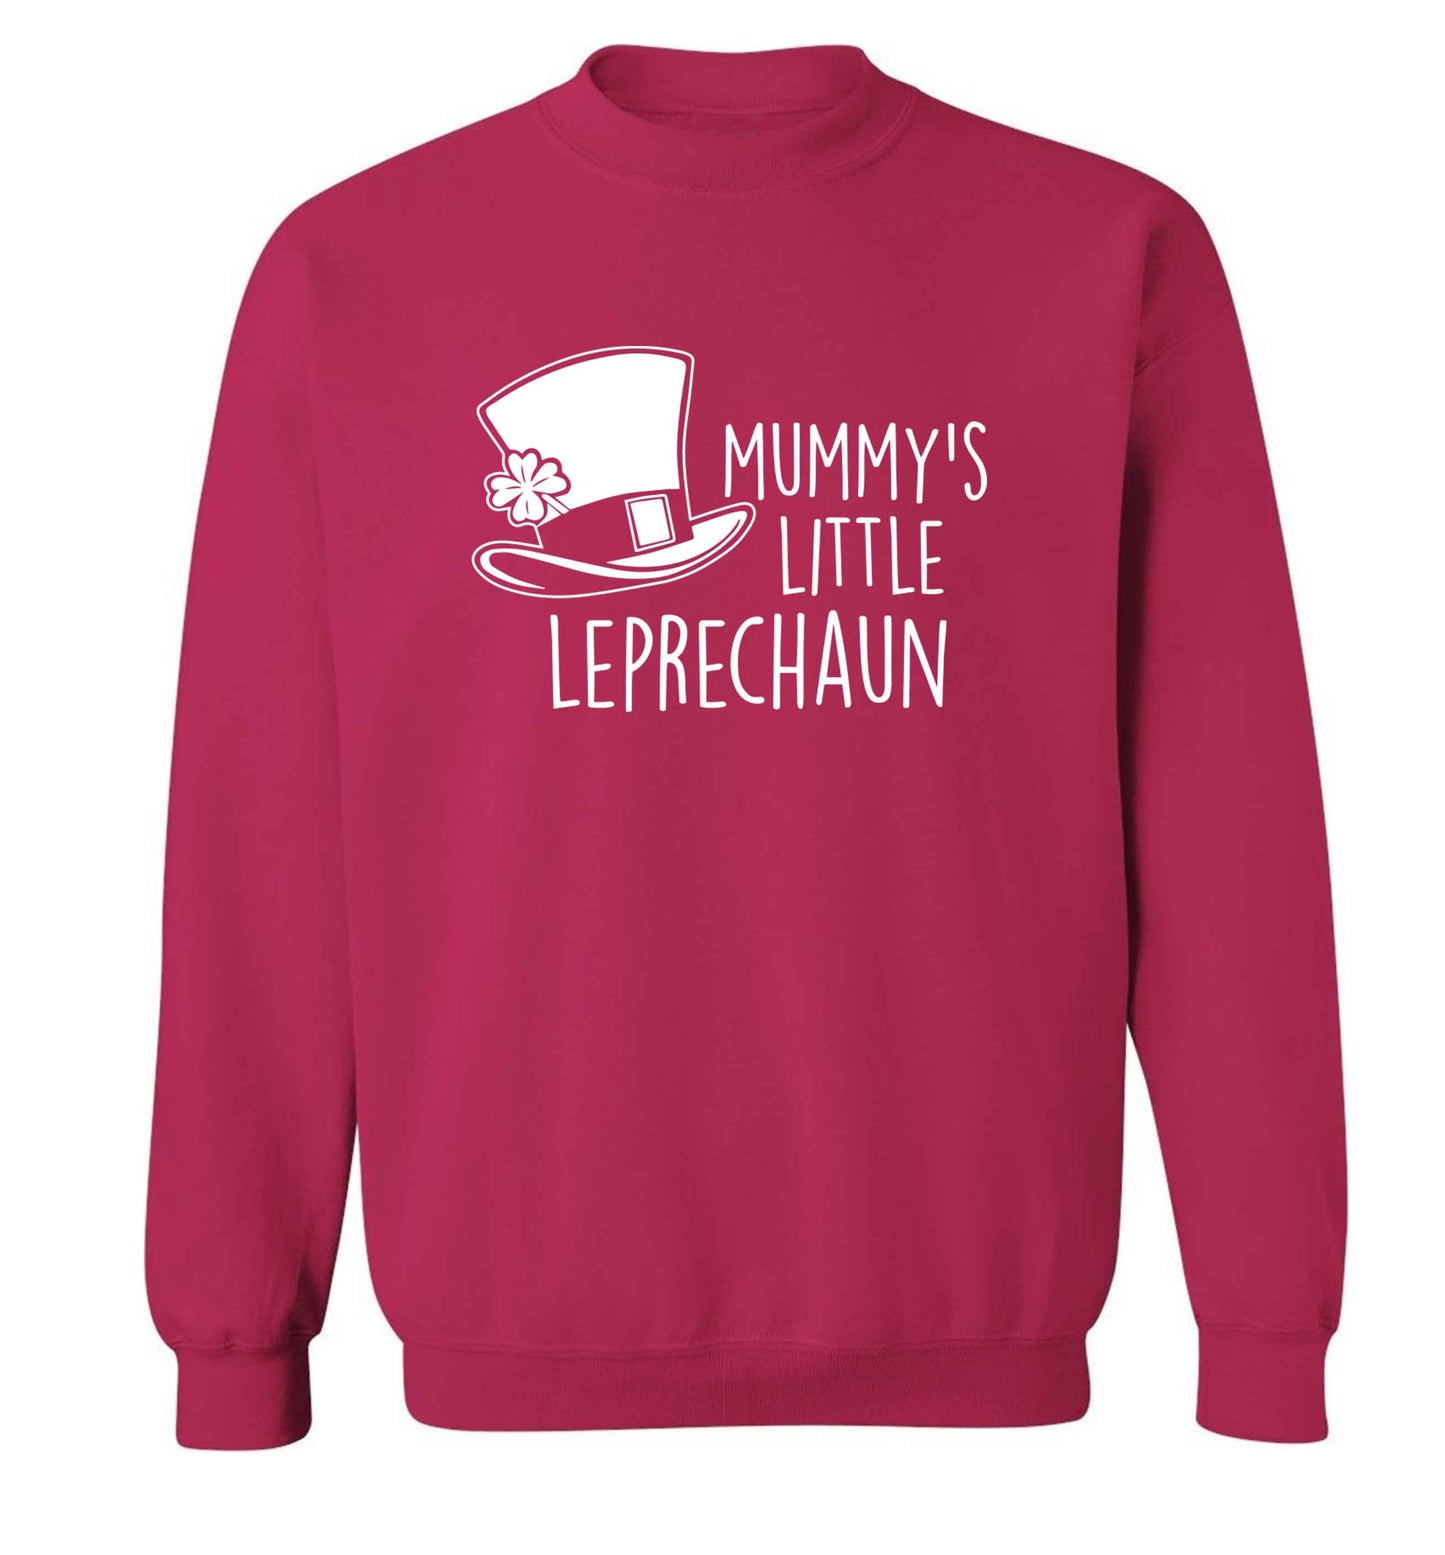 Mummy's little leprechaun adult's unisex pink sweater 2XL